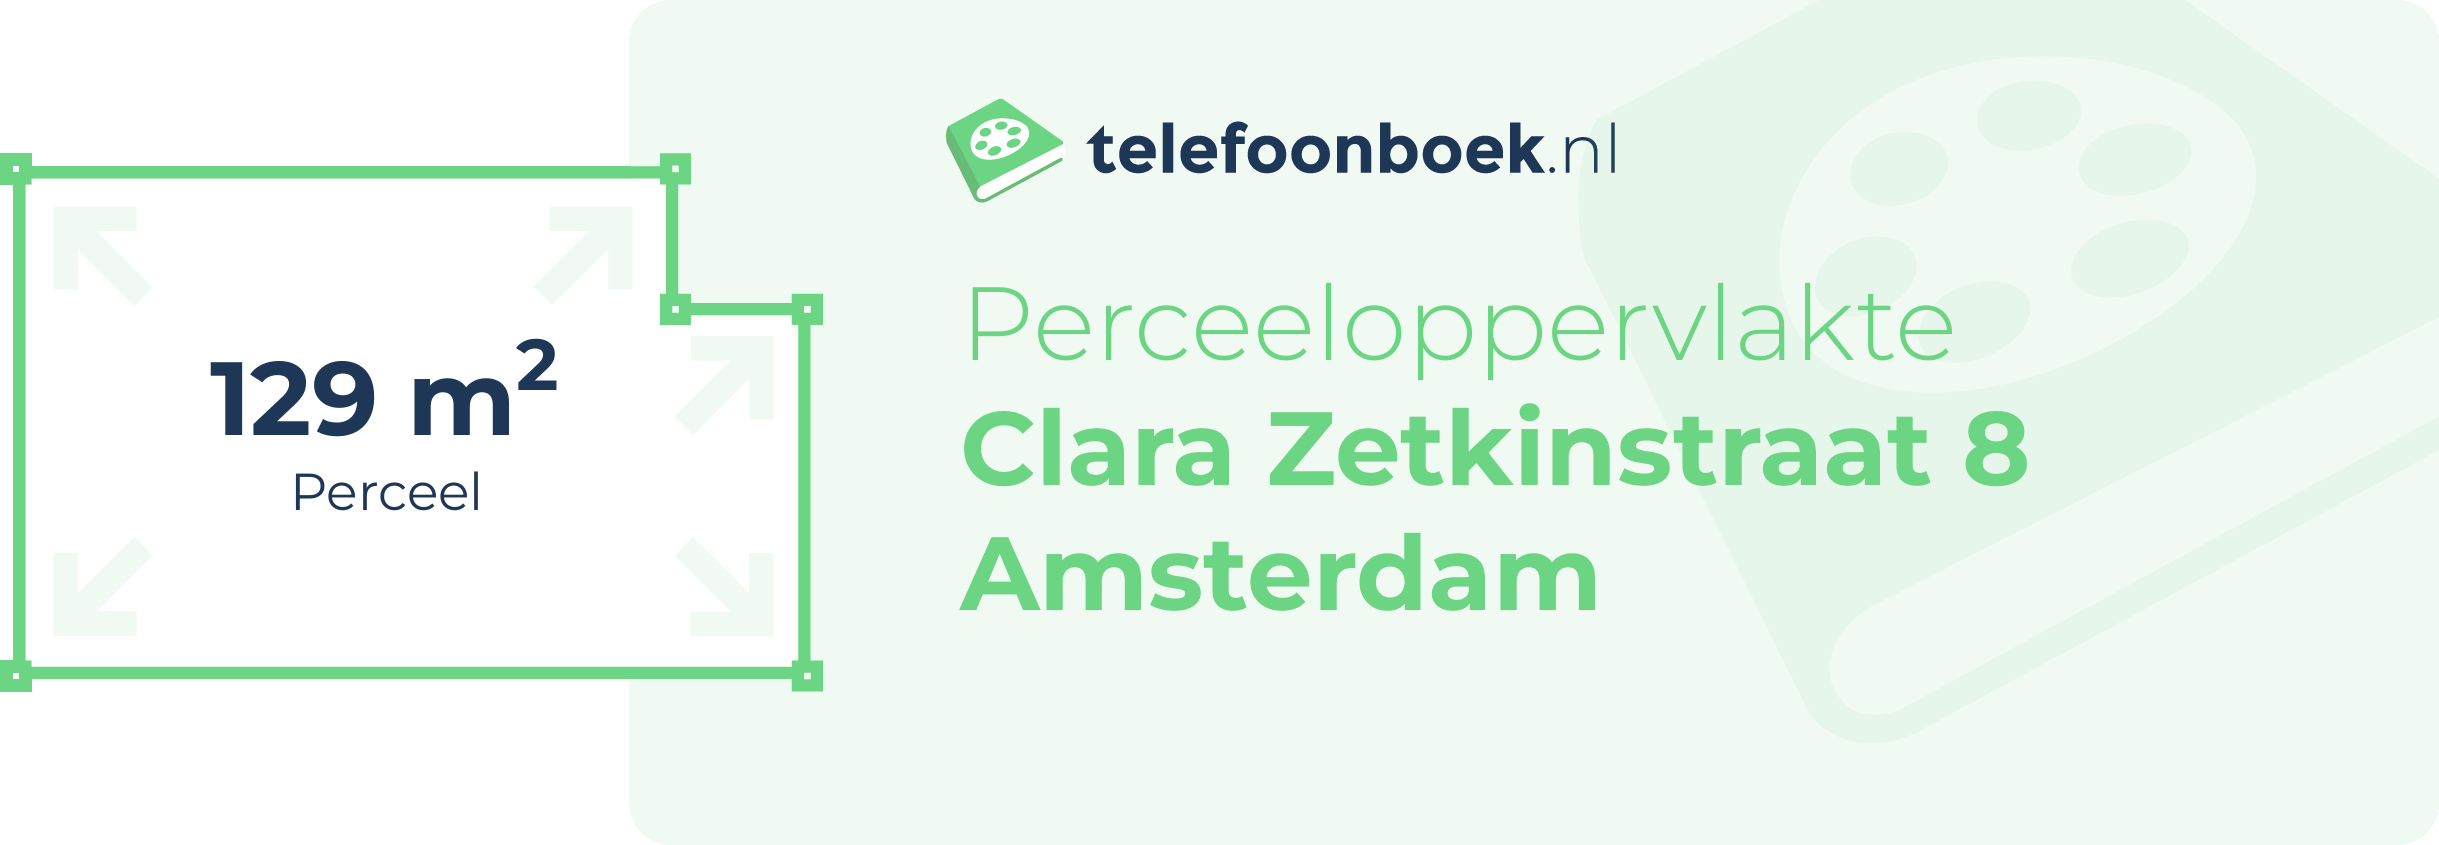 Perceeloppervlakte Clara Zetkinstraat 8 Amsterdam